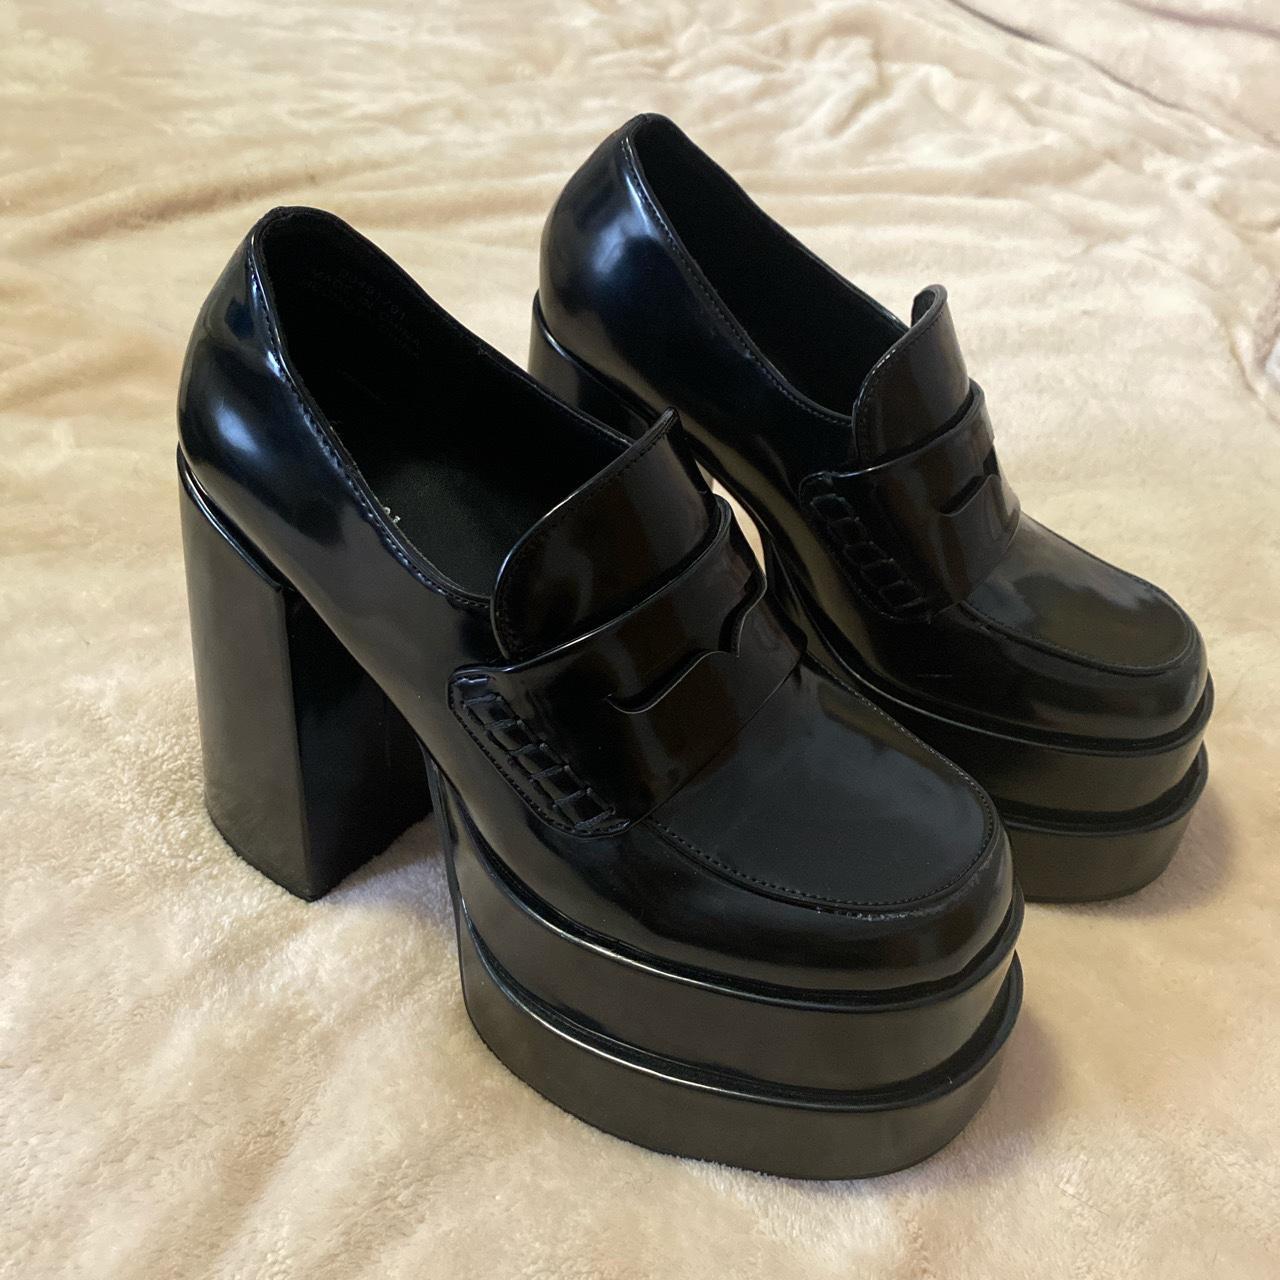 Black tall heels - Depop